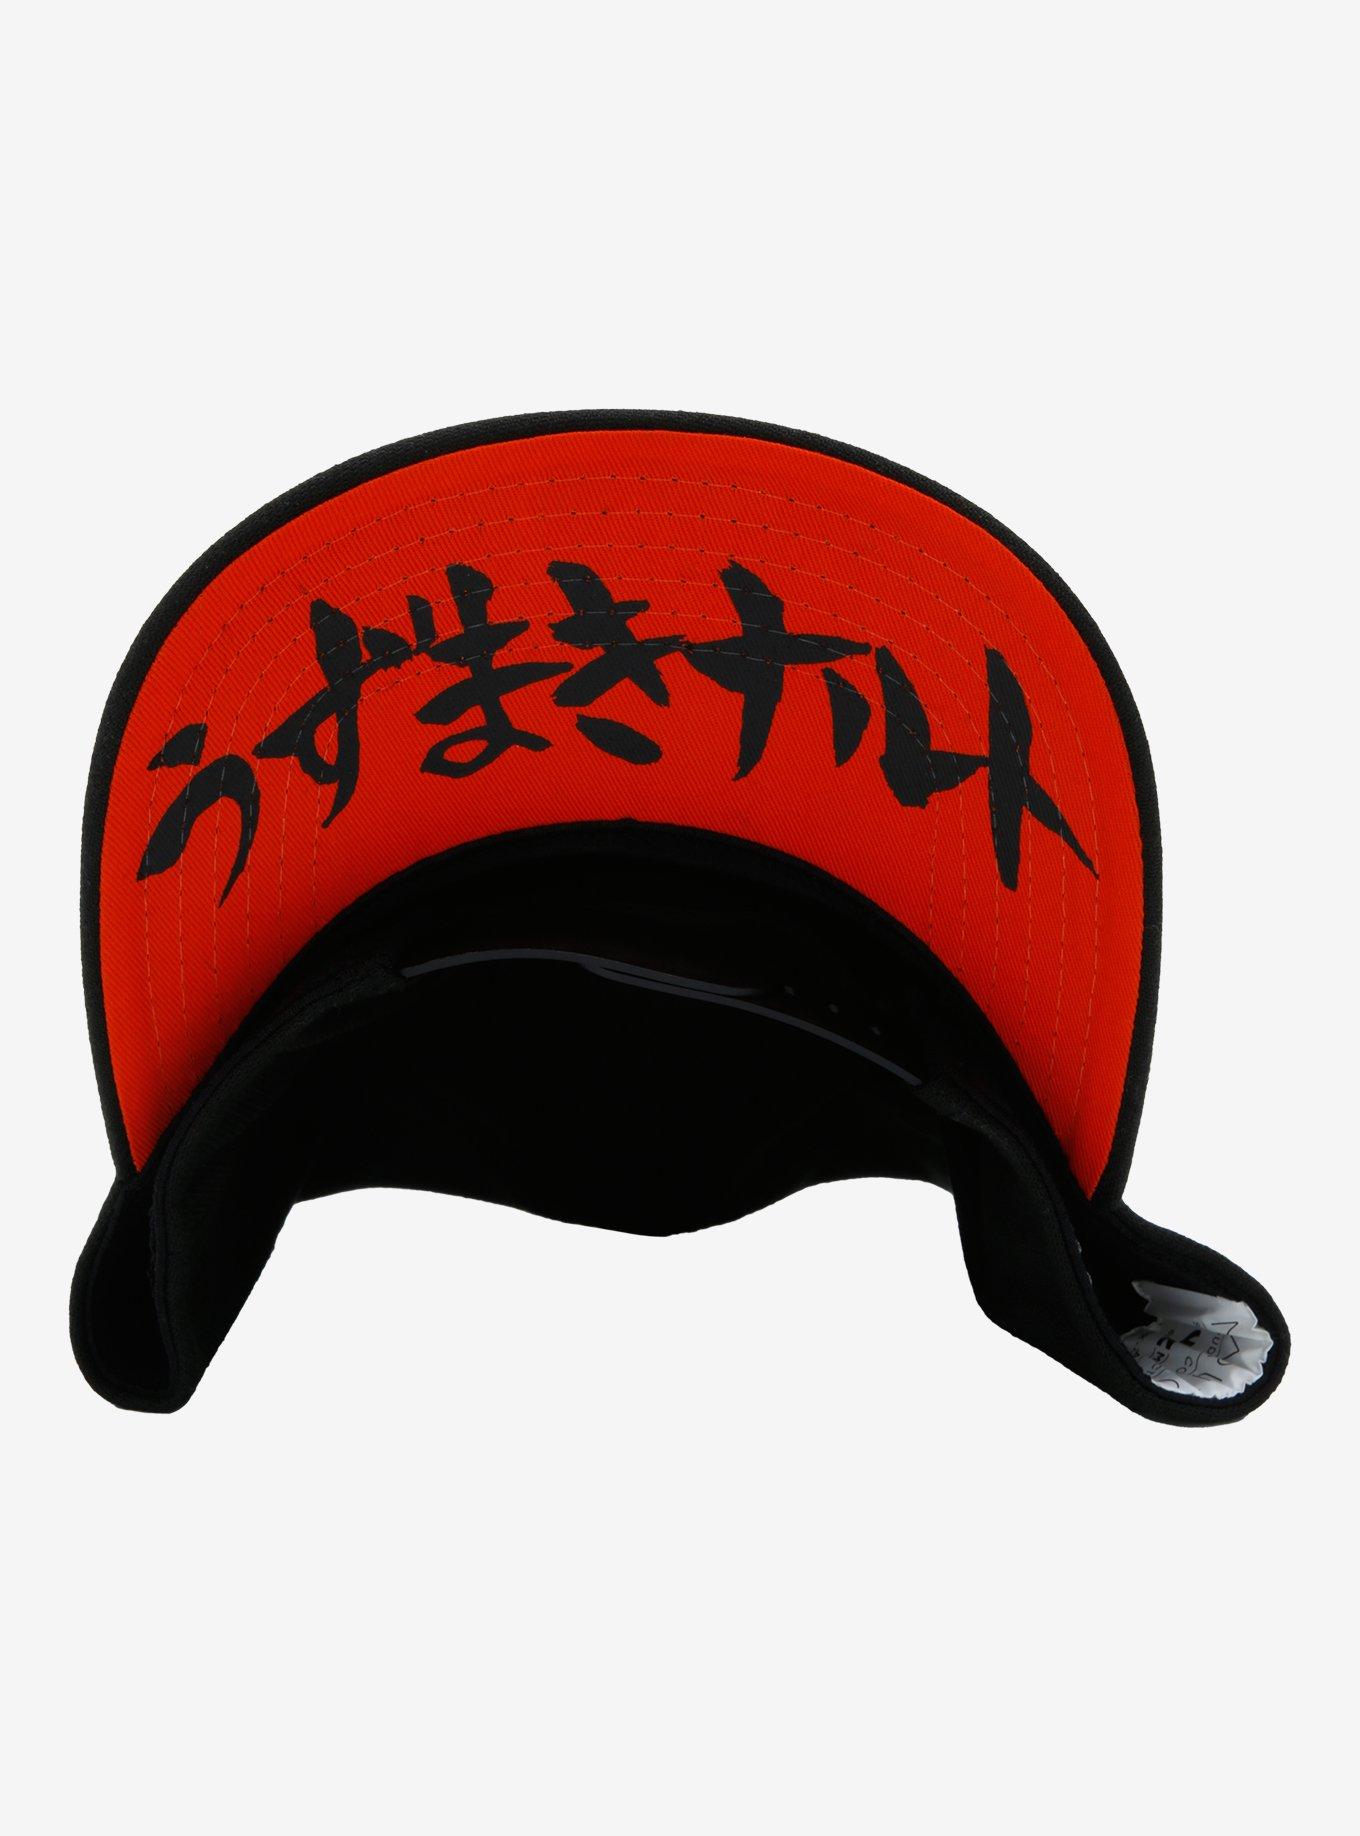 Naruto Shippuden Eyes Patch Snapback Hat, , alternate